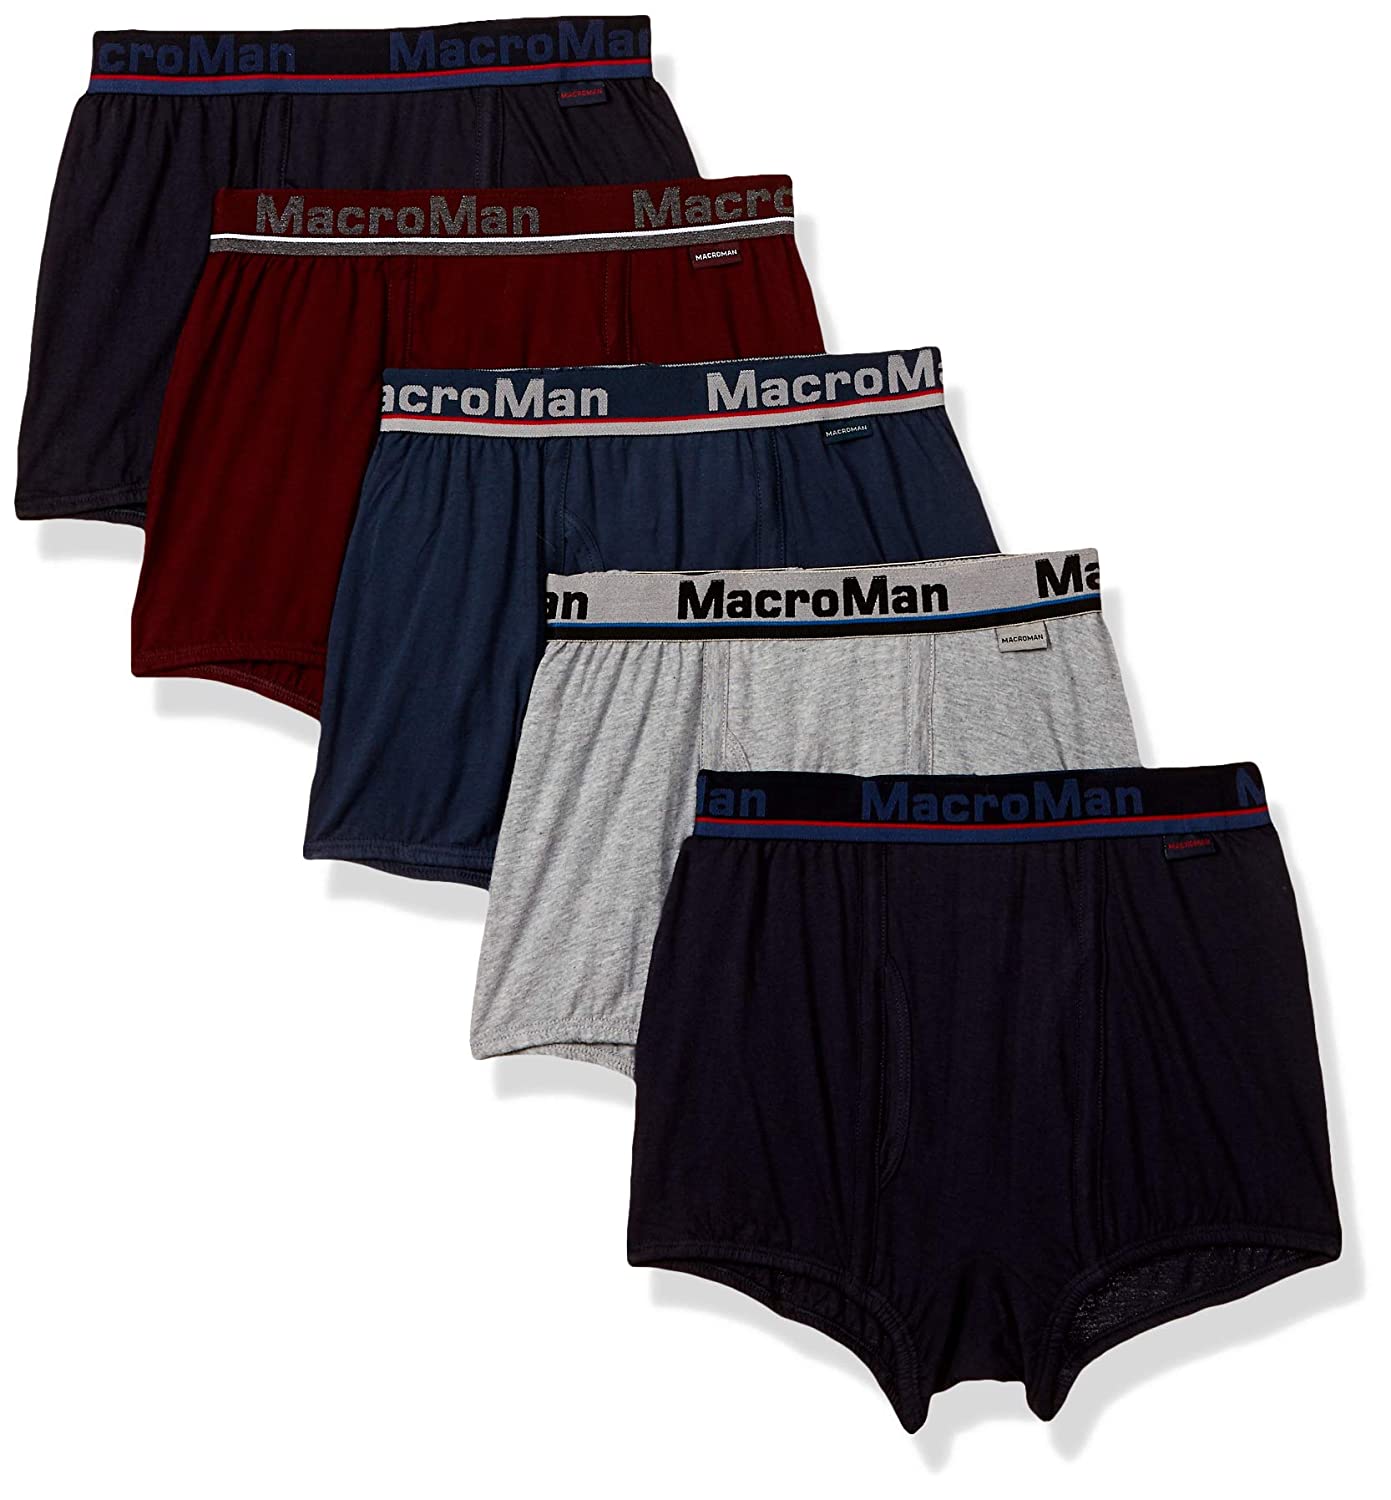 rupa underwear Archives - Rear Bear: Buy undergarments for men and